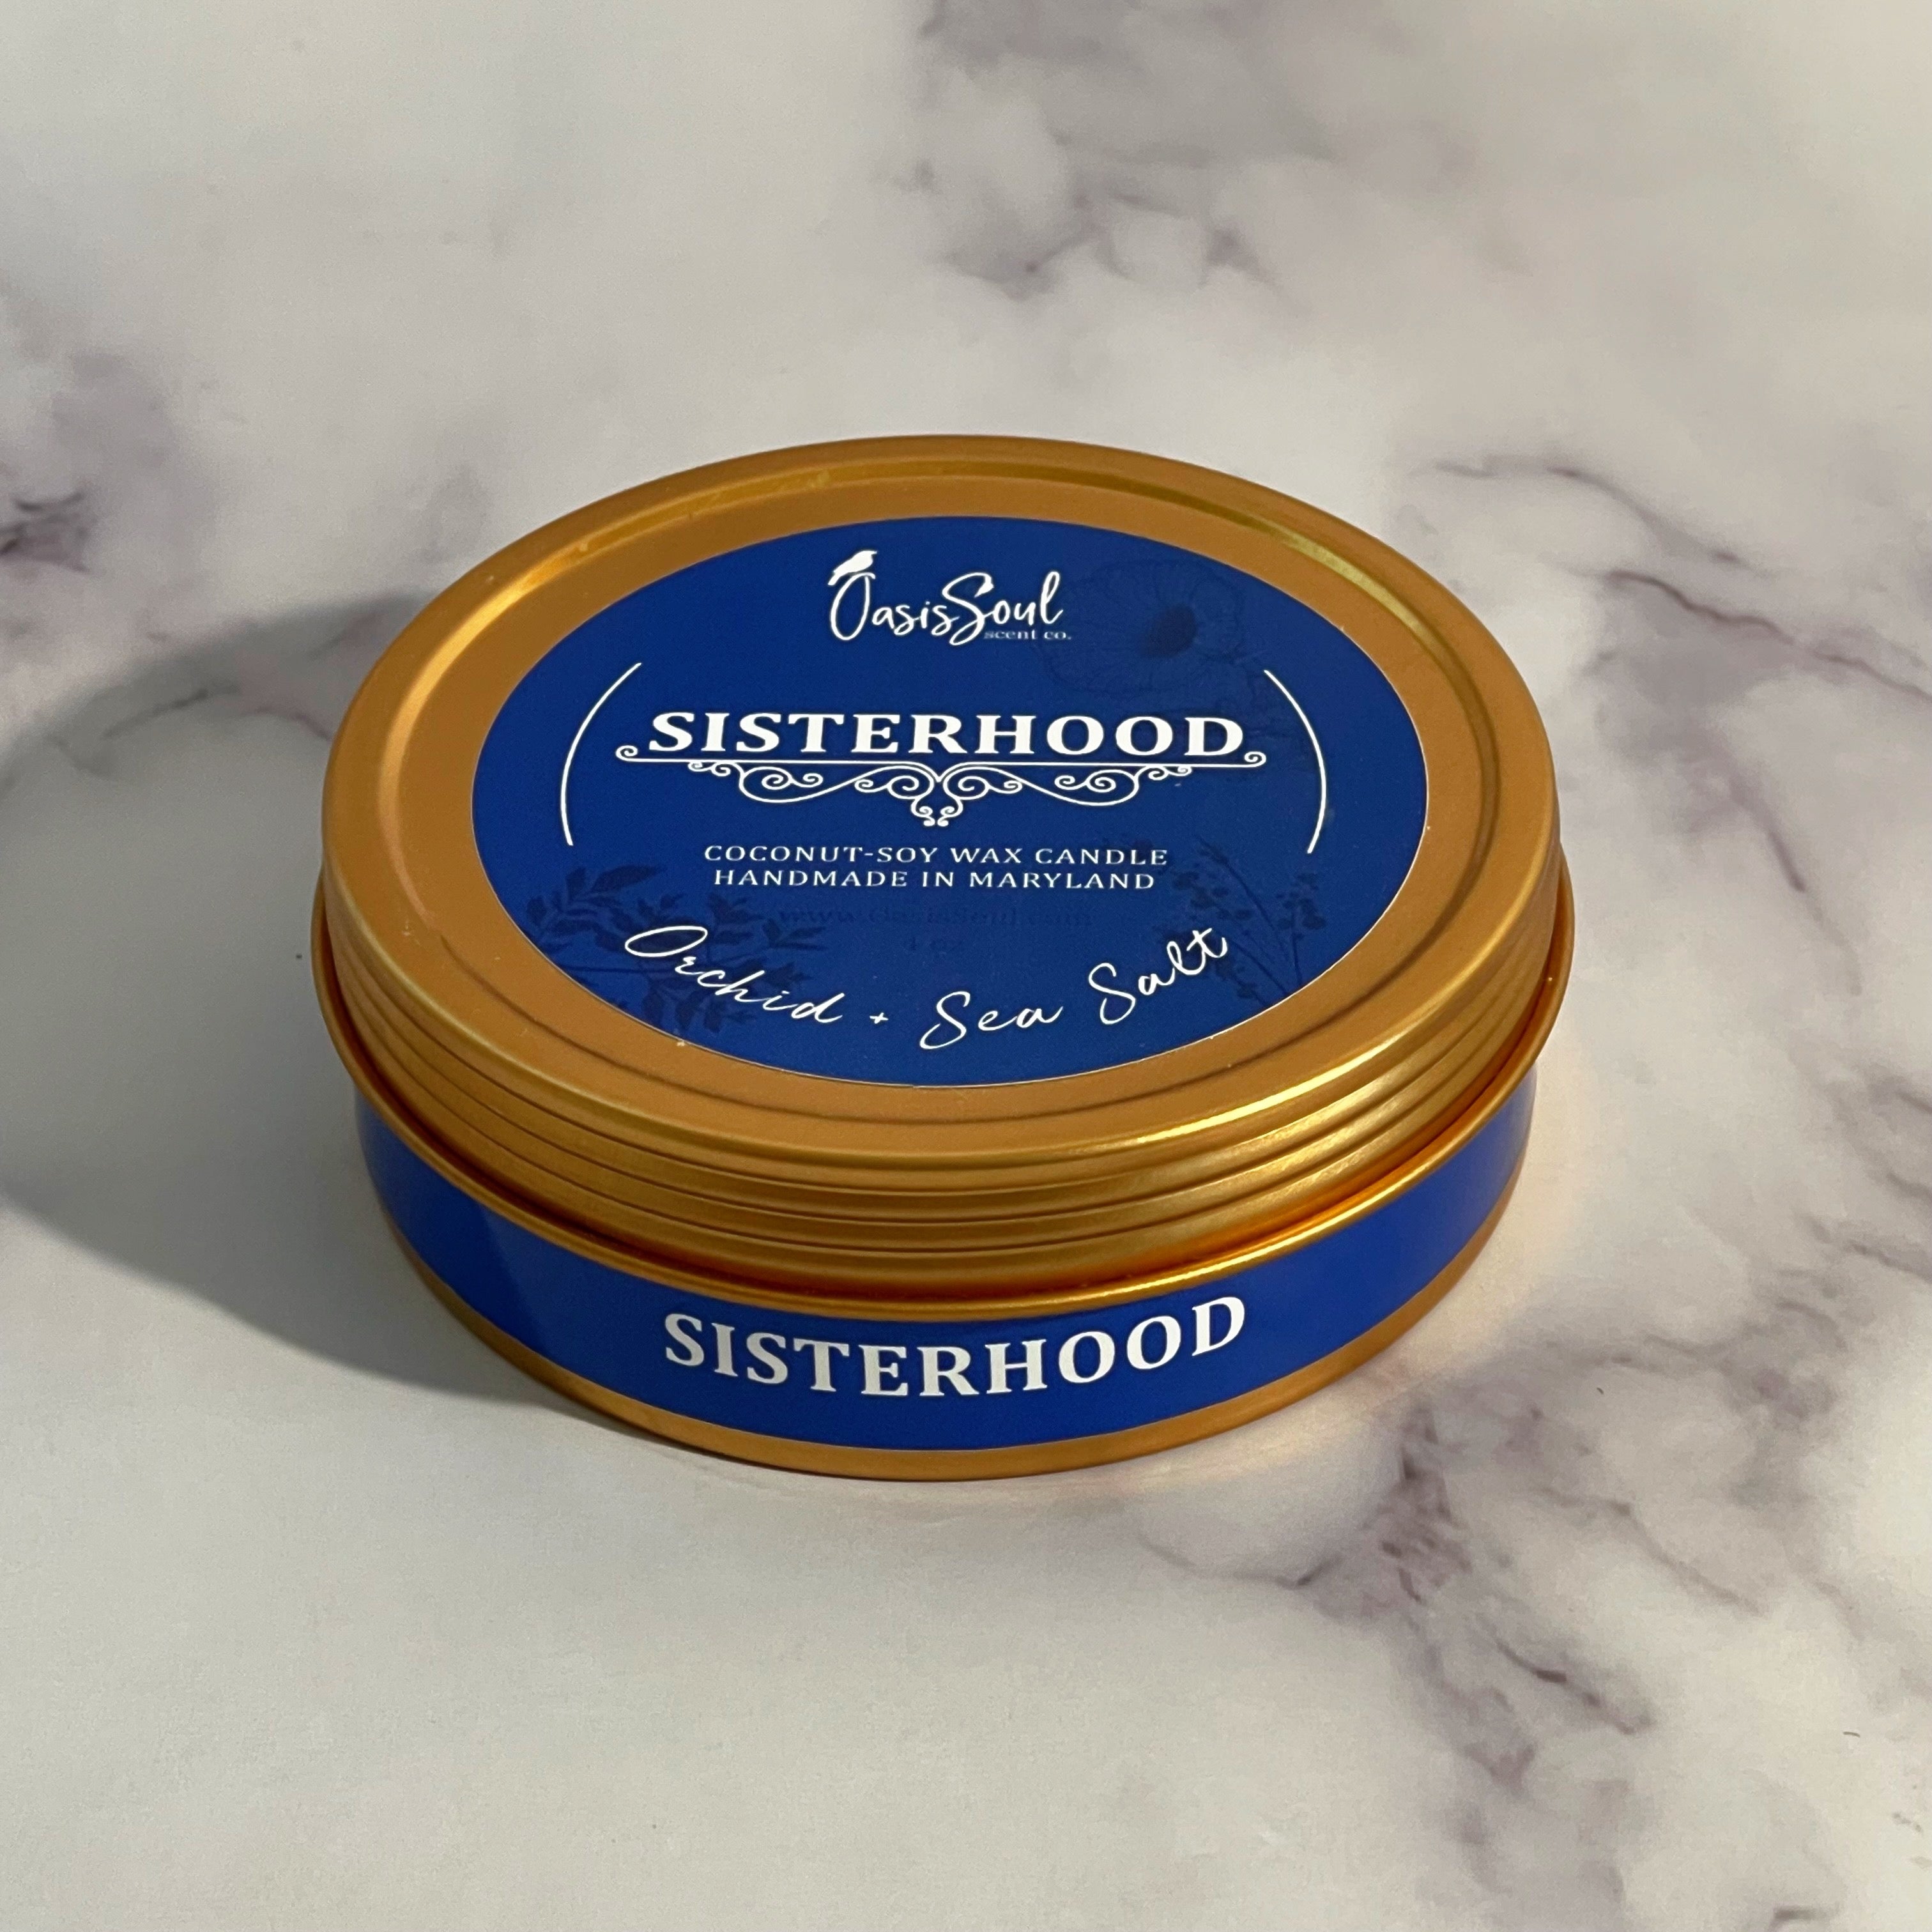 SISTERHOOD Candle Collection - Limited Edition Tins